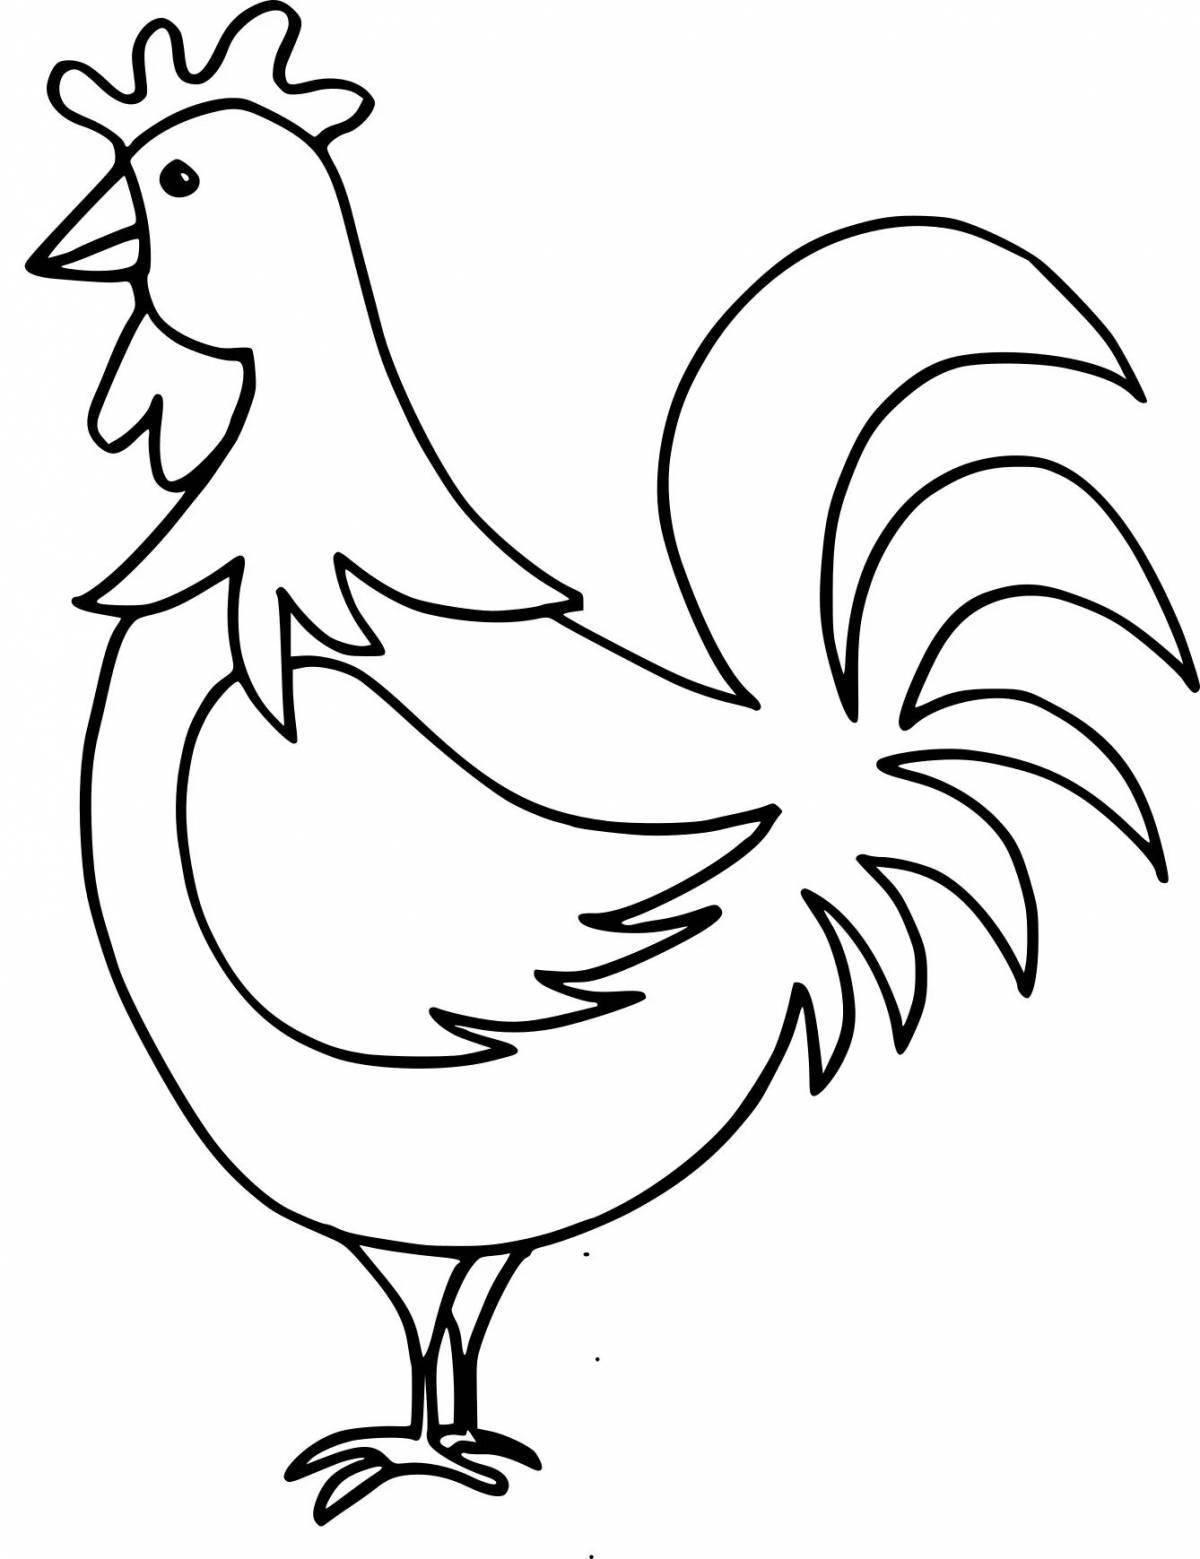 Coloring joyful rooster for children